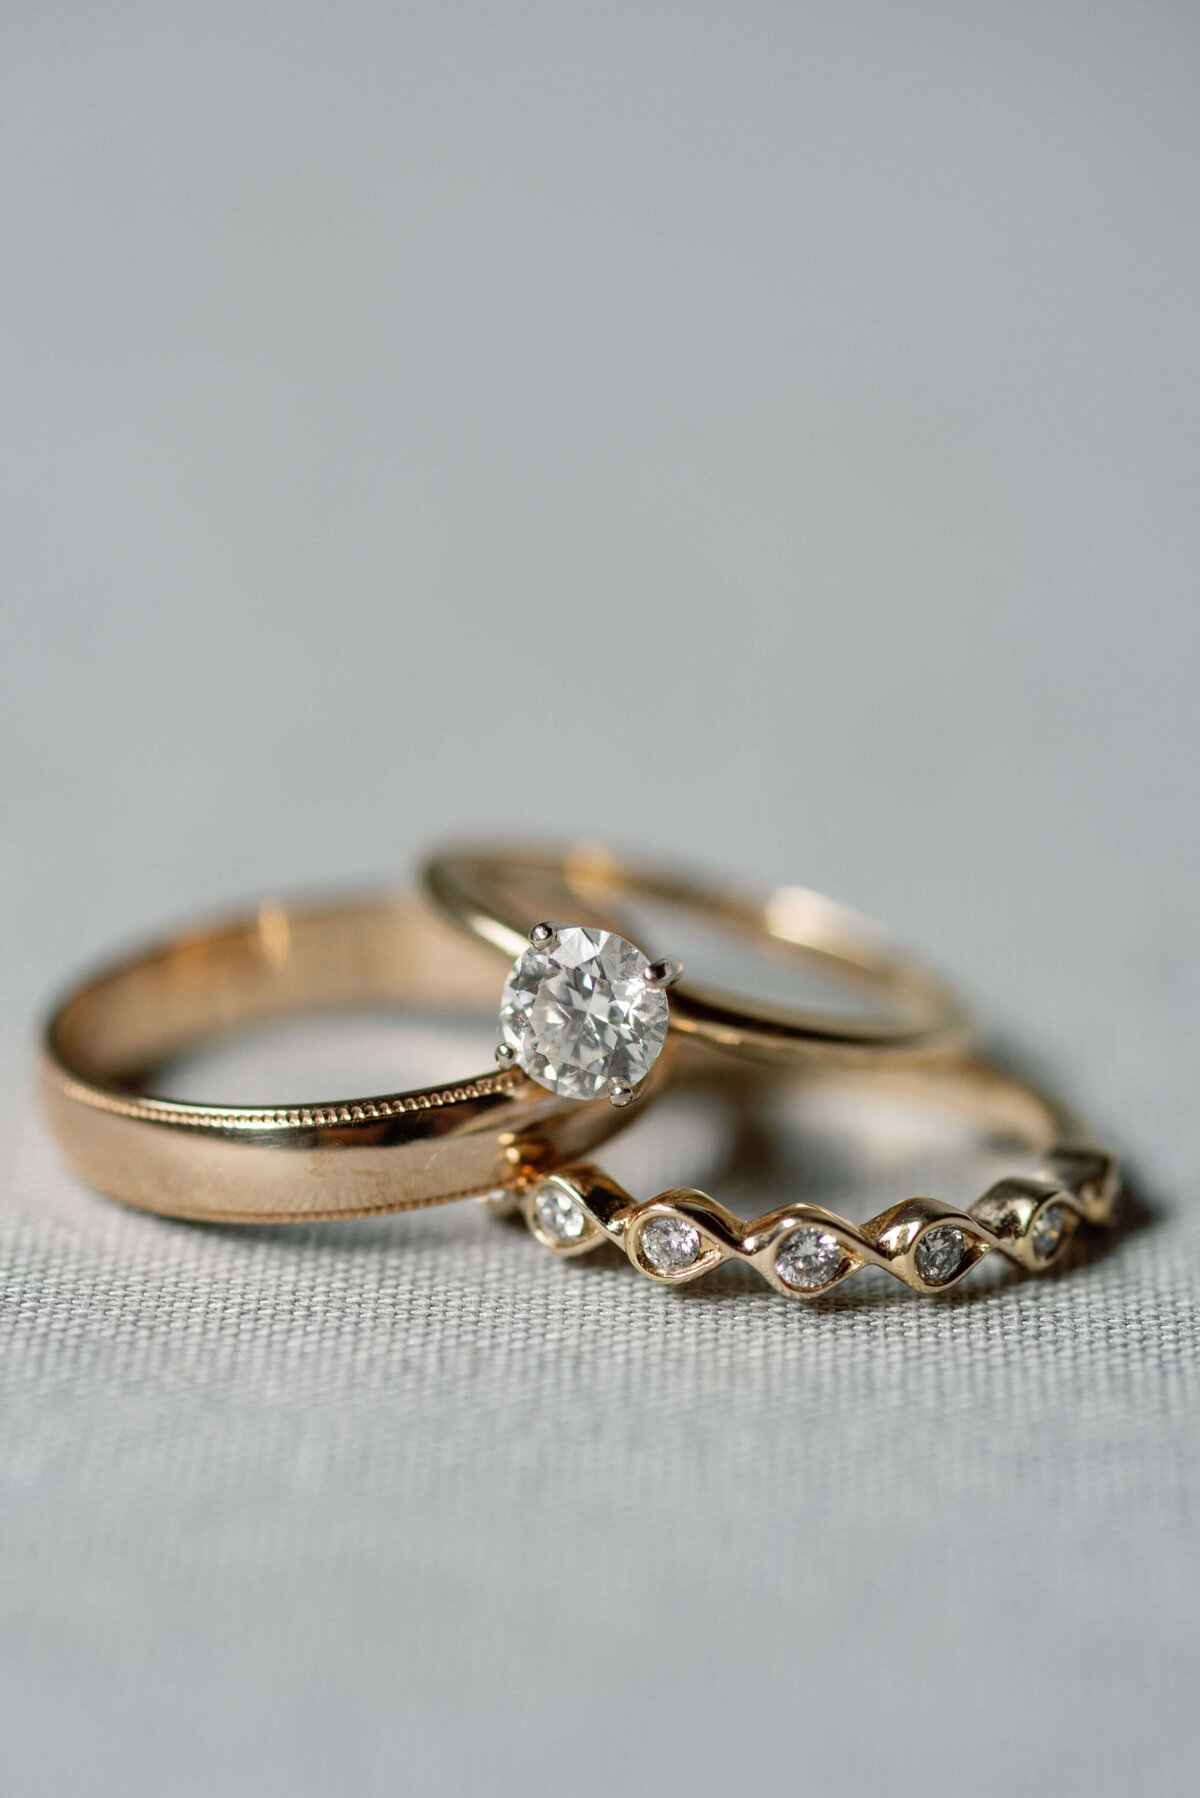 Wedding rings and engagement ring at Oak Island Resort wedding, Nova Scotia